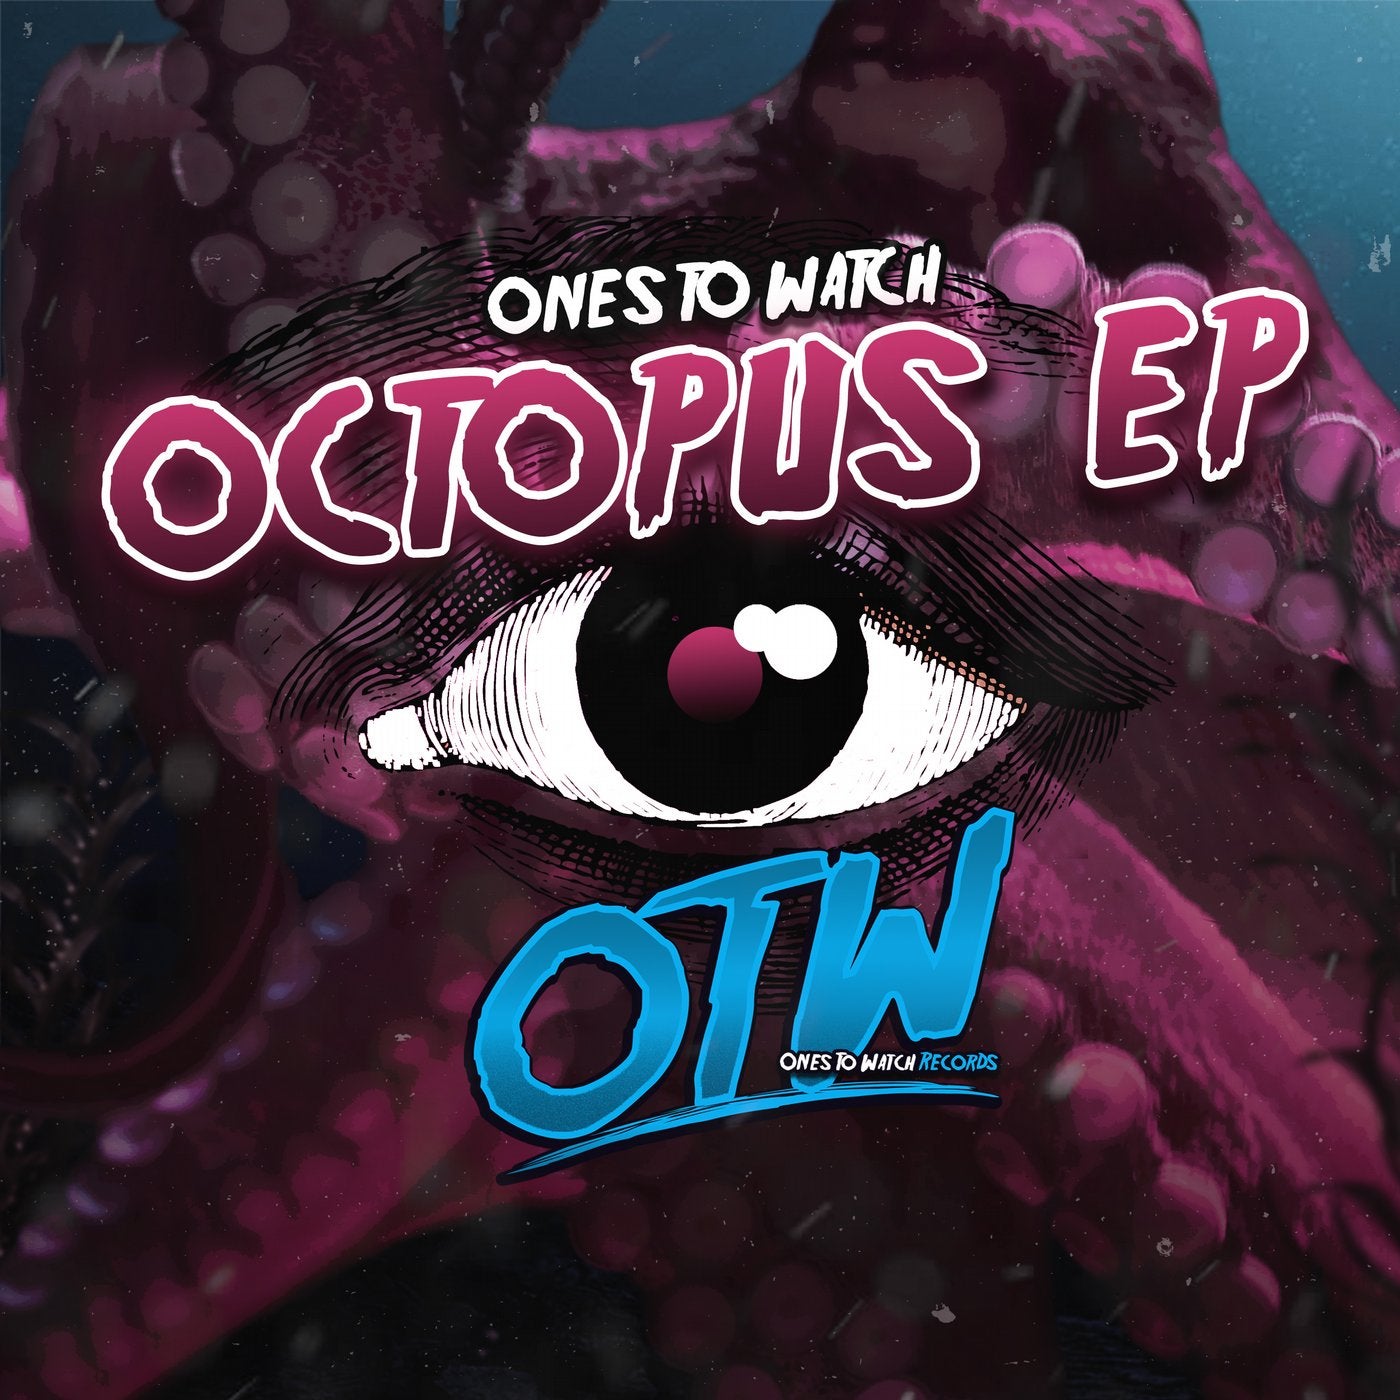 Octopus EP